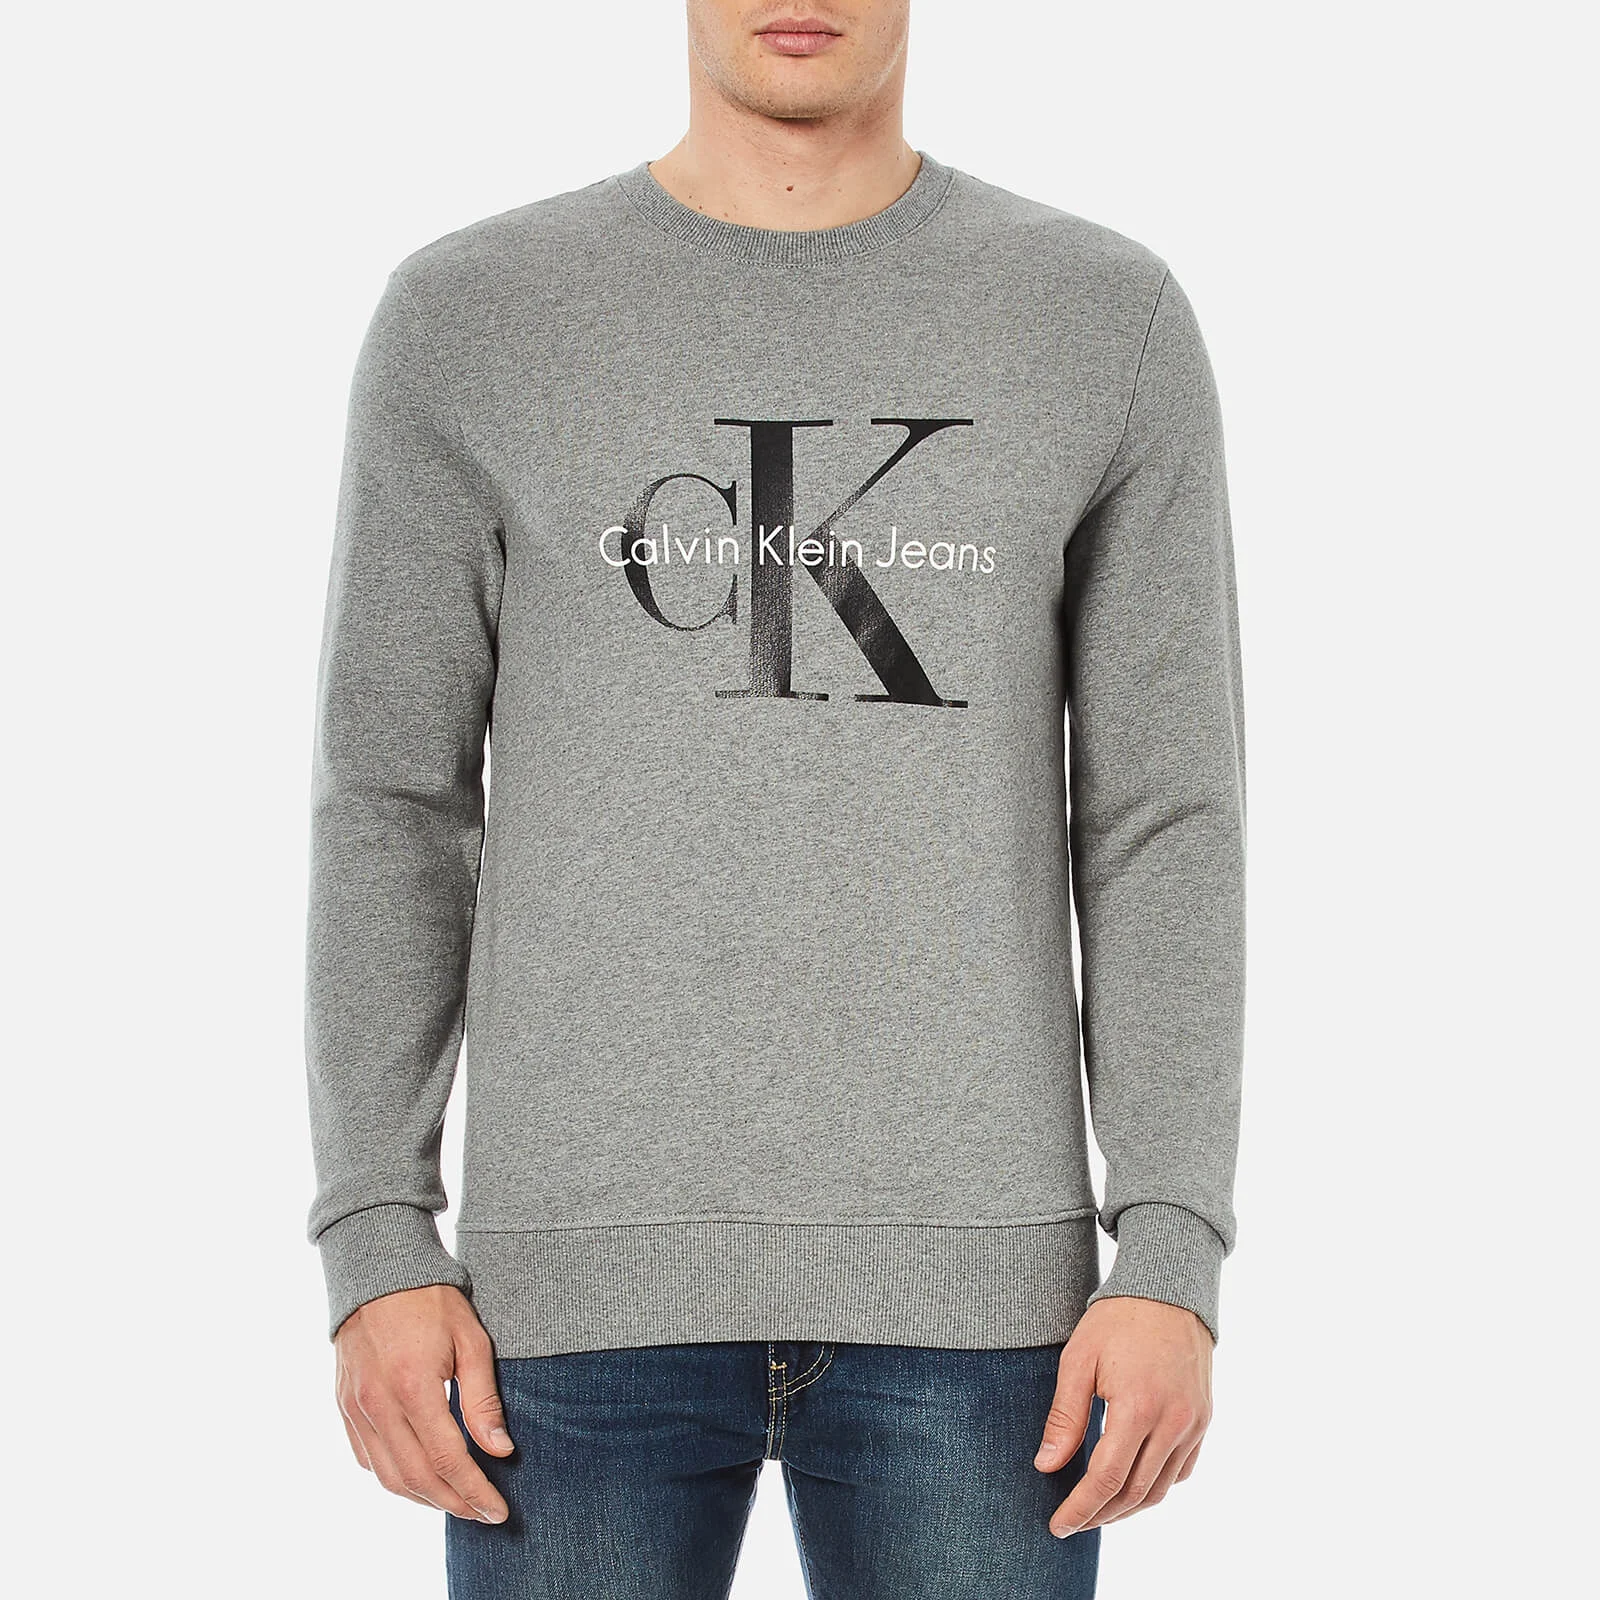 Calvin Klein Men's 90's Re-Issue Sweatshirt - Light Grey Heather Image 1